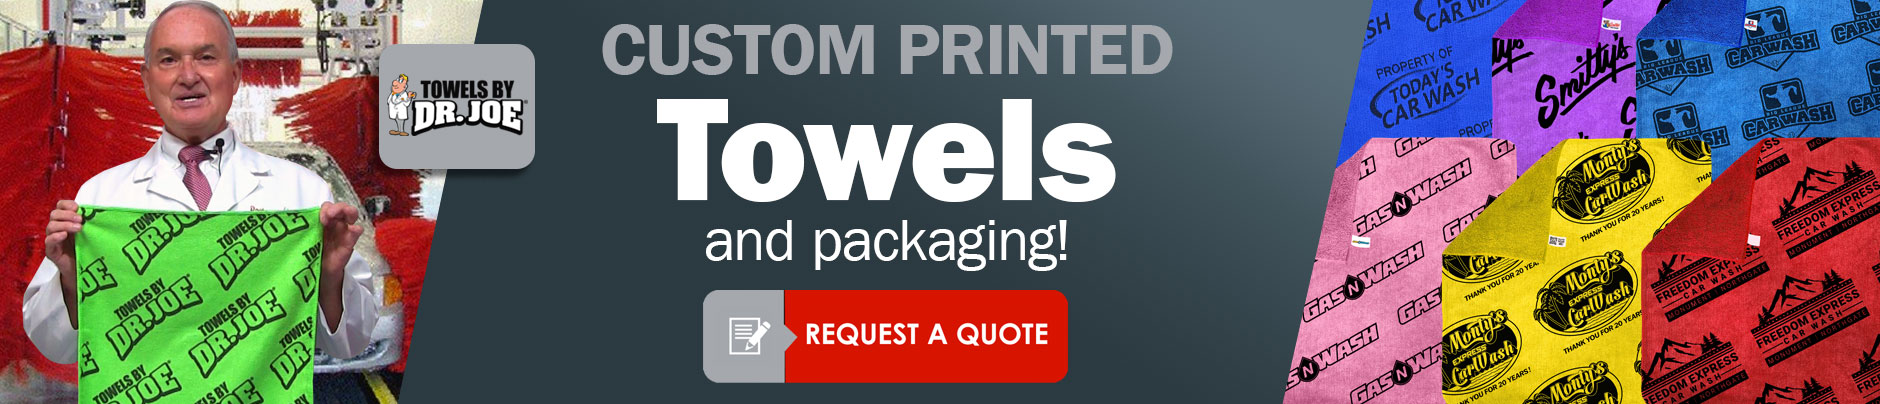 Custom Printed Towels